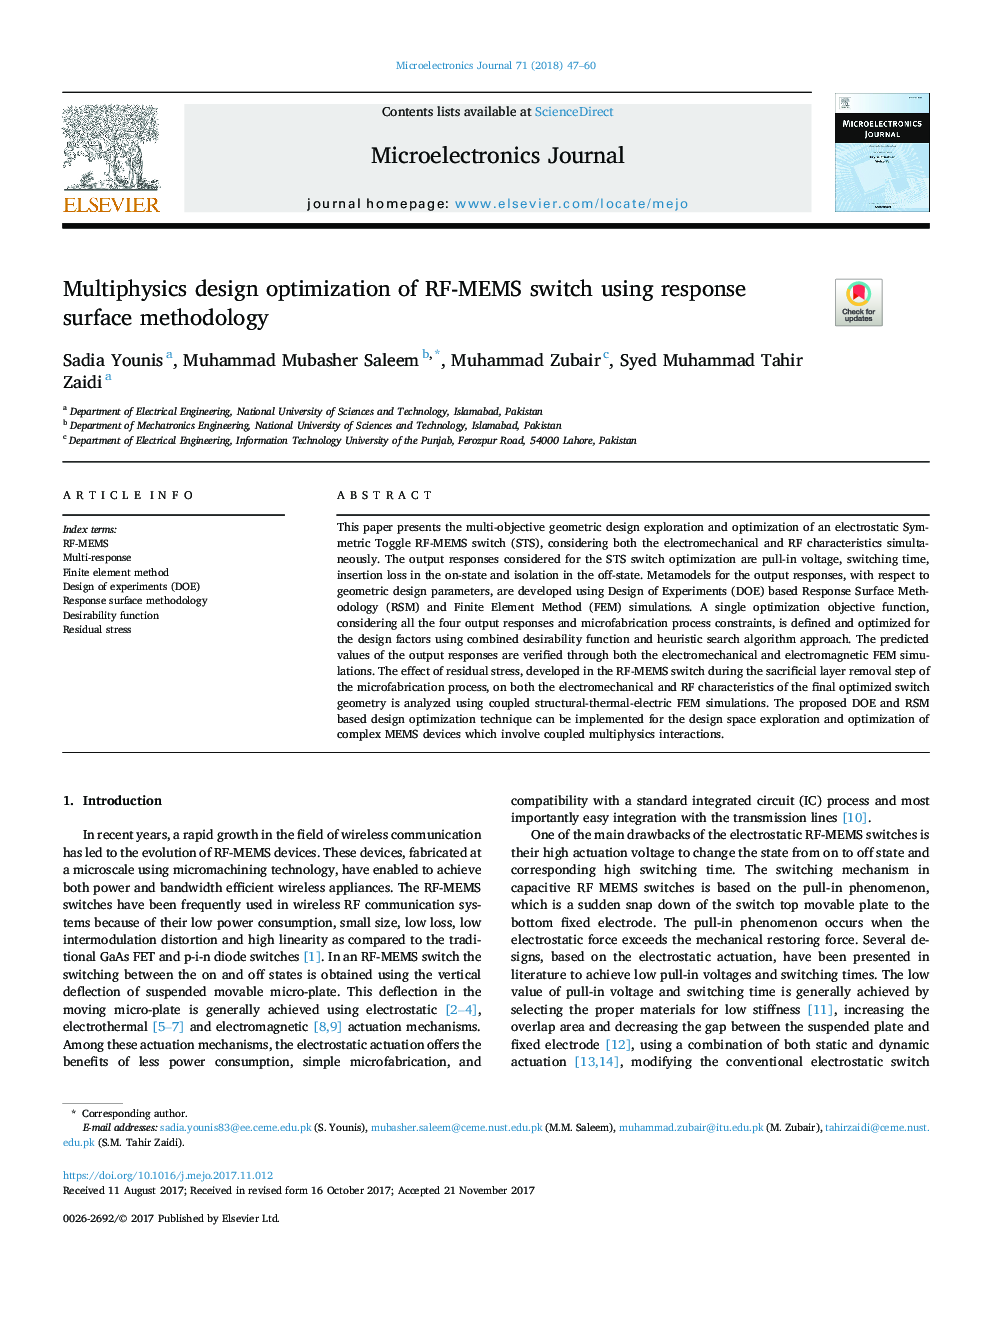 Multiphysics design optimization of RF-MEMS switch using response surface methodology